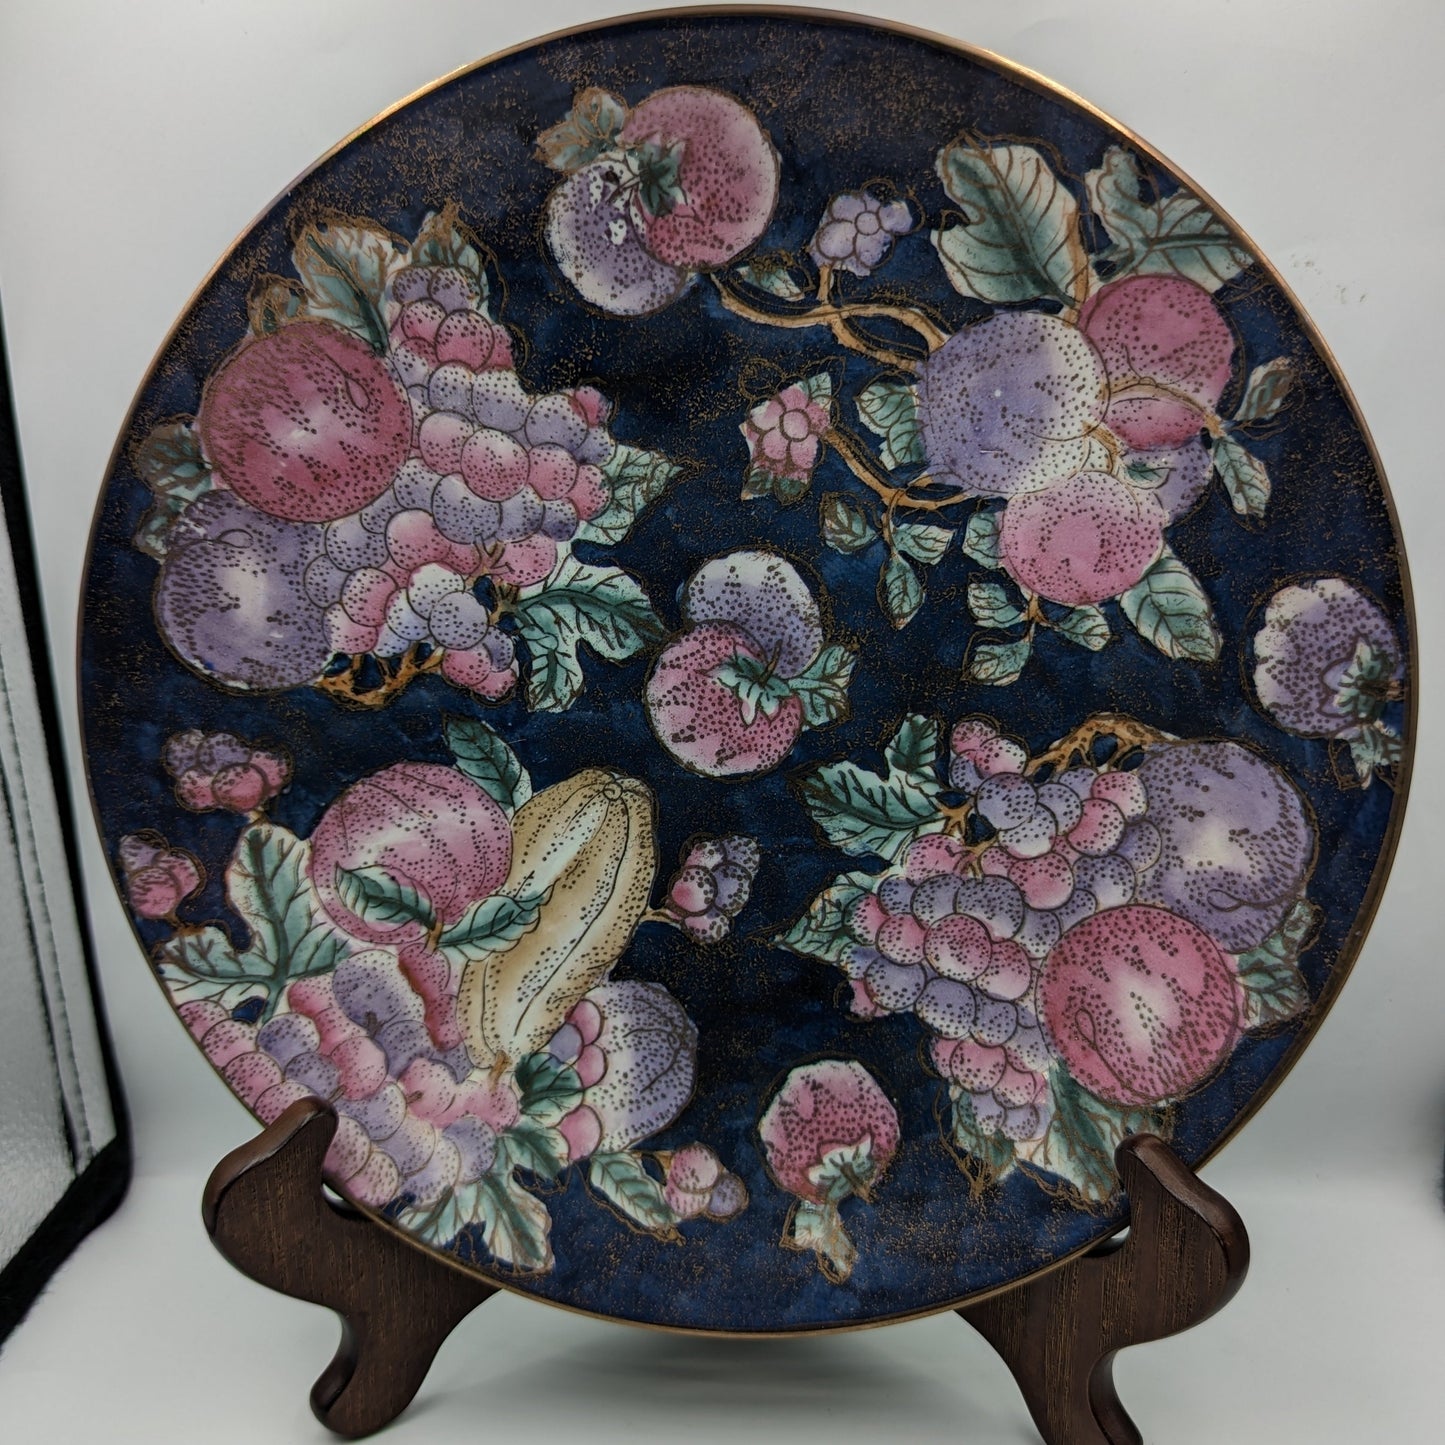 Vintage Fruit-Themed Decorative Plate